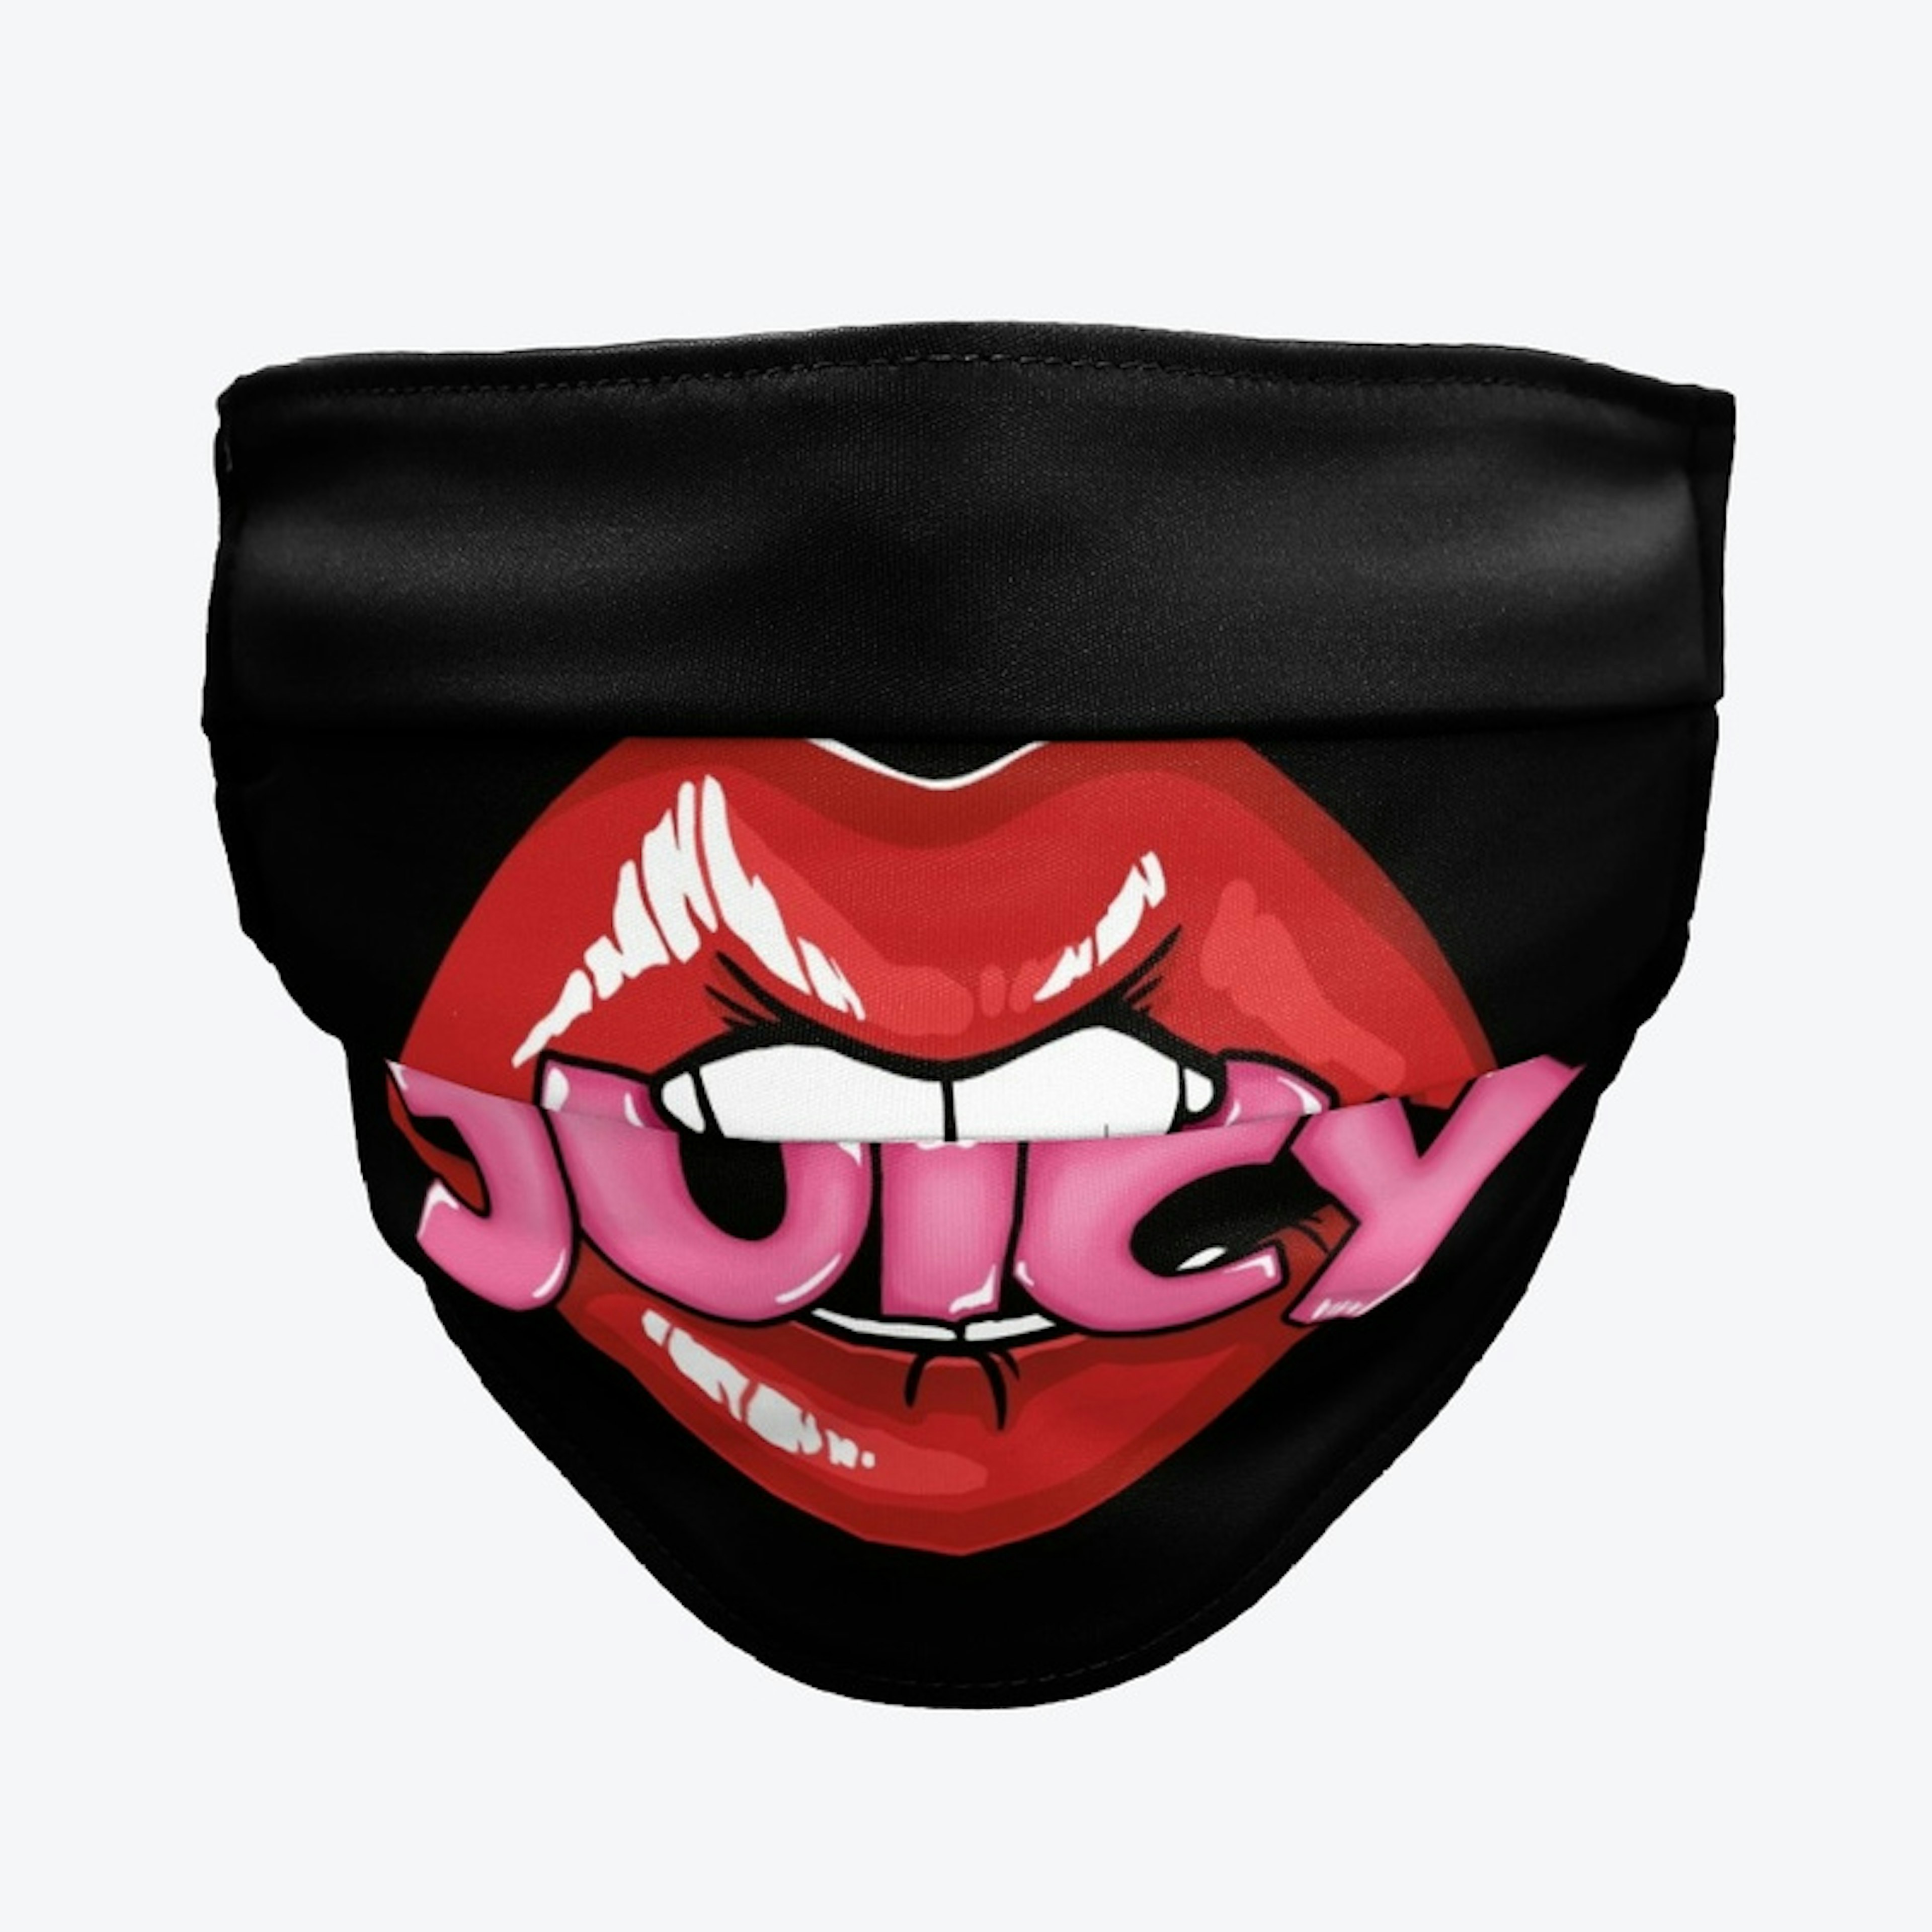 Juicy Face Mask